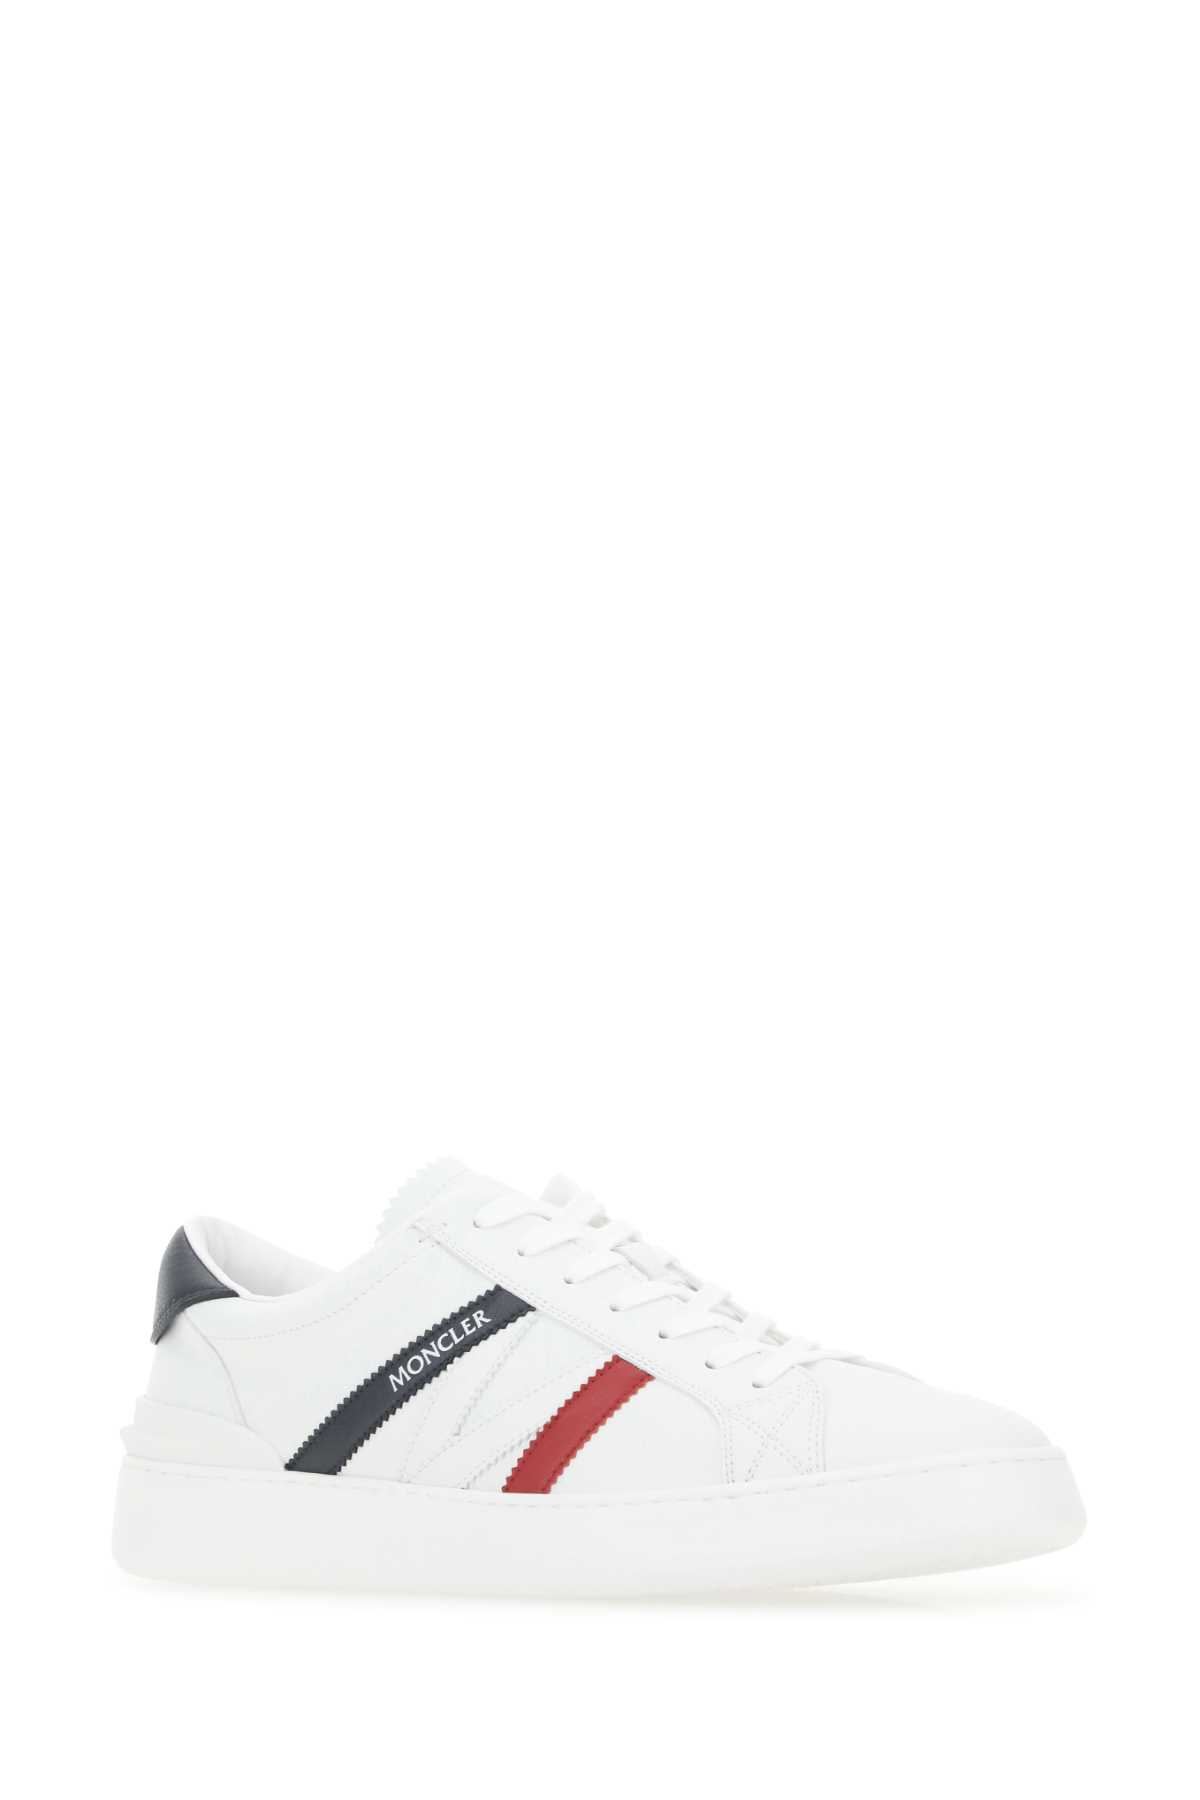 Moncler White Leather Monaco M Sneakers